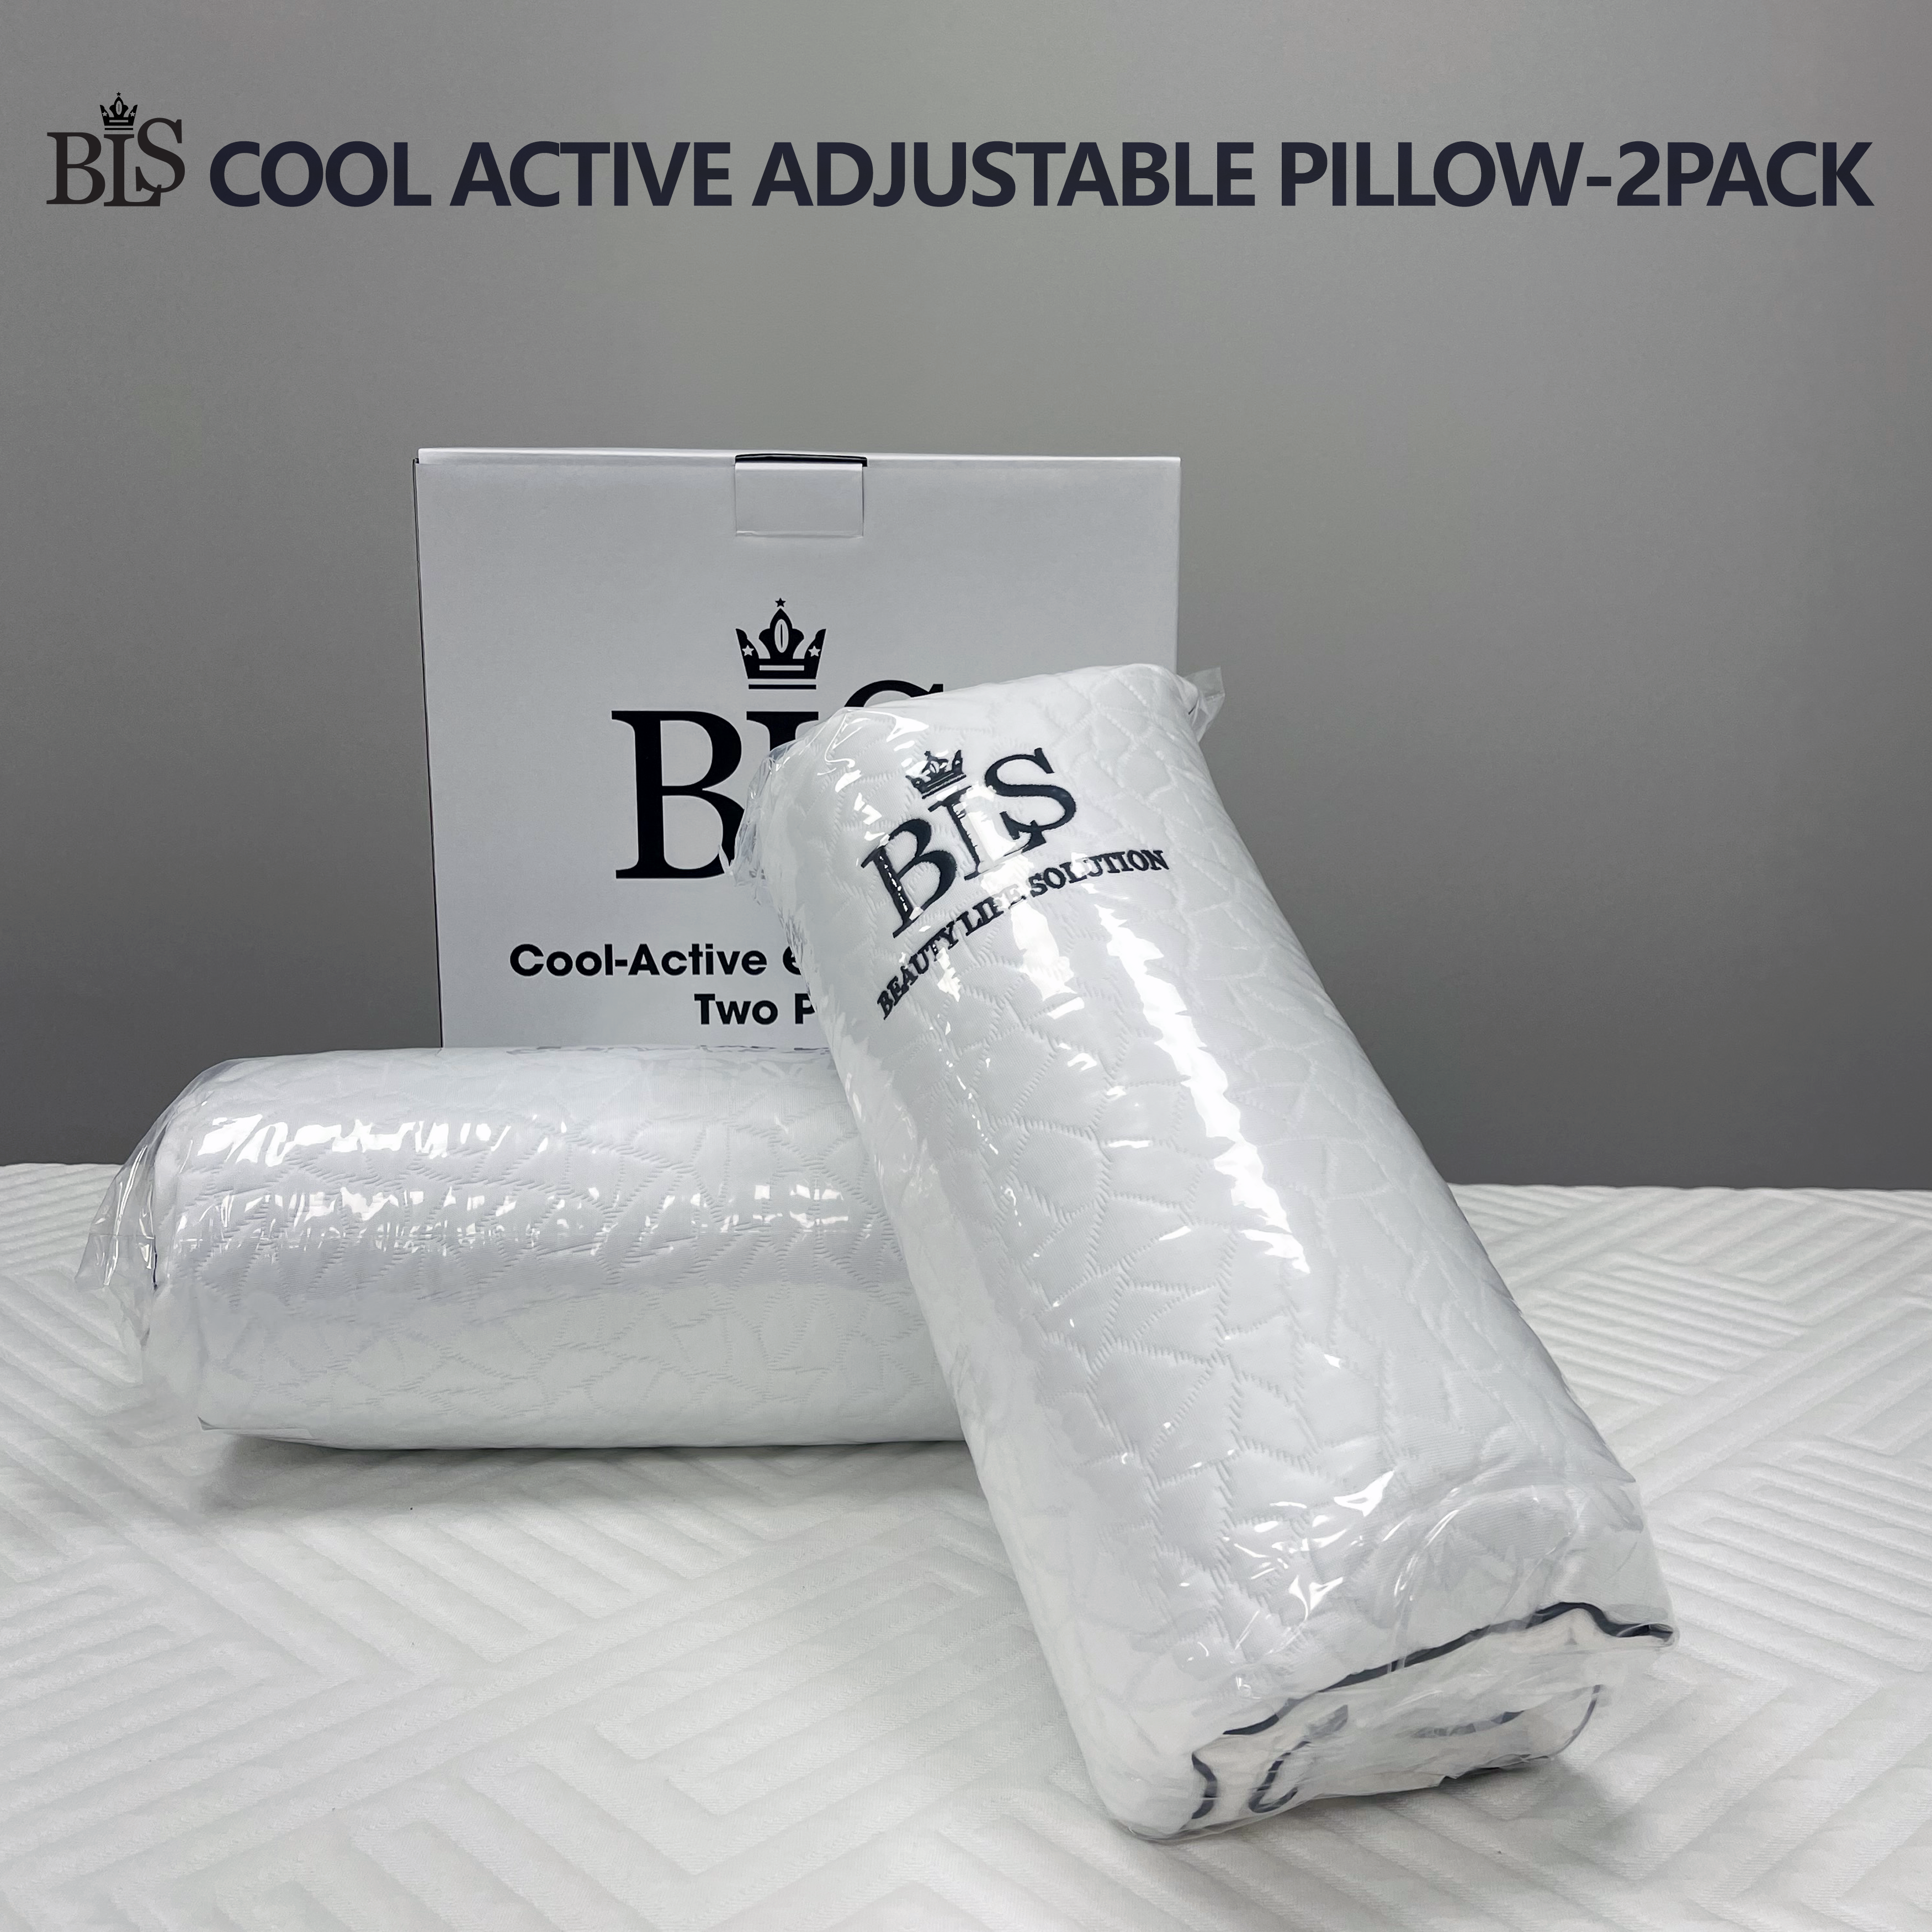 BLS Cool Active Premium Adjustable Pillows - 2 Pack